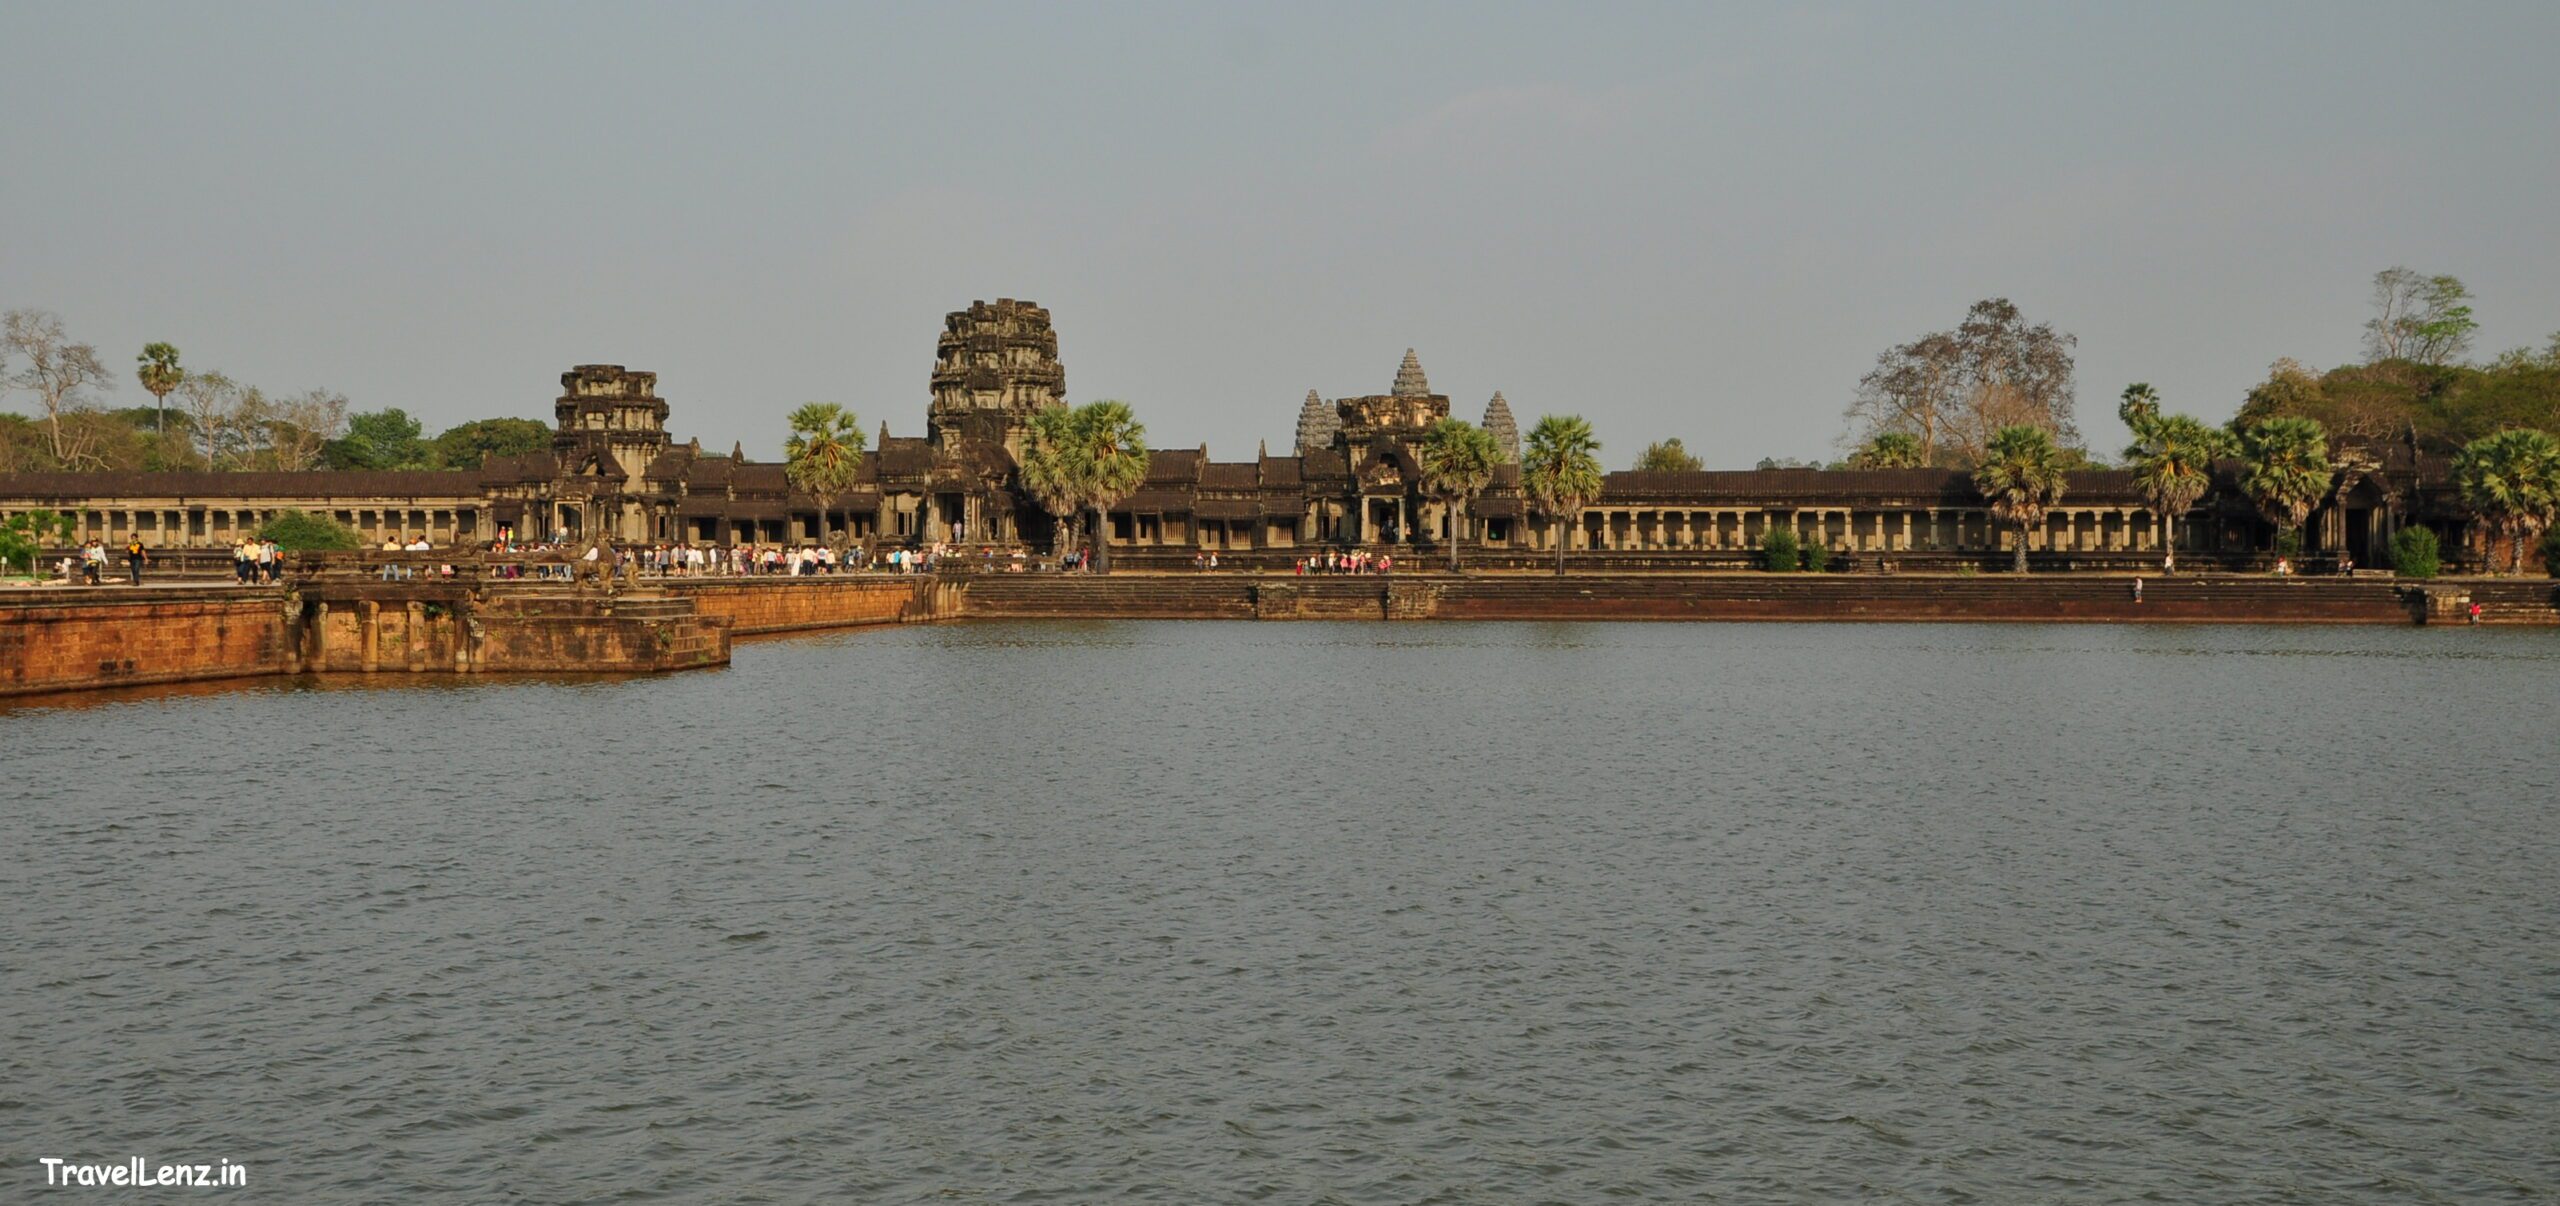 Angkor Wat - the causeway